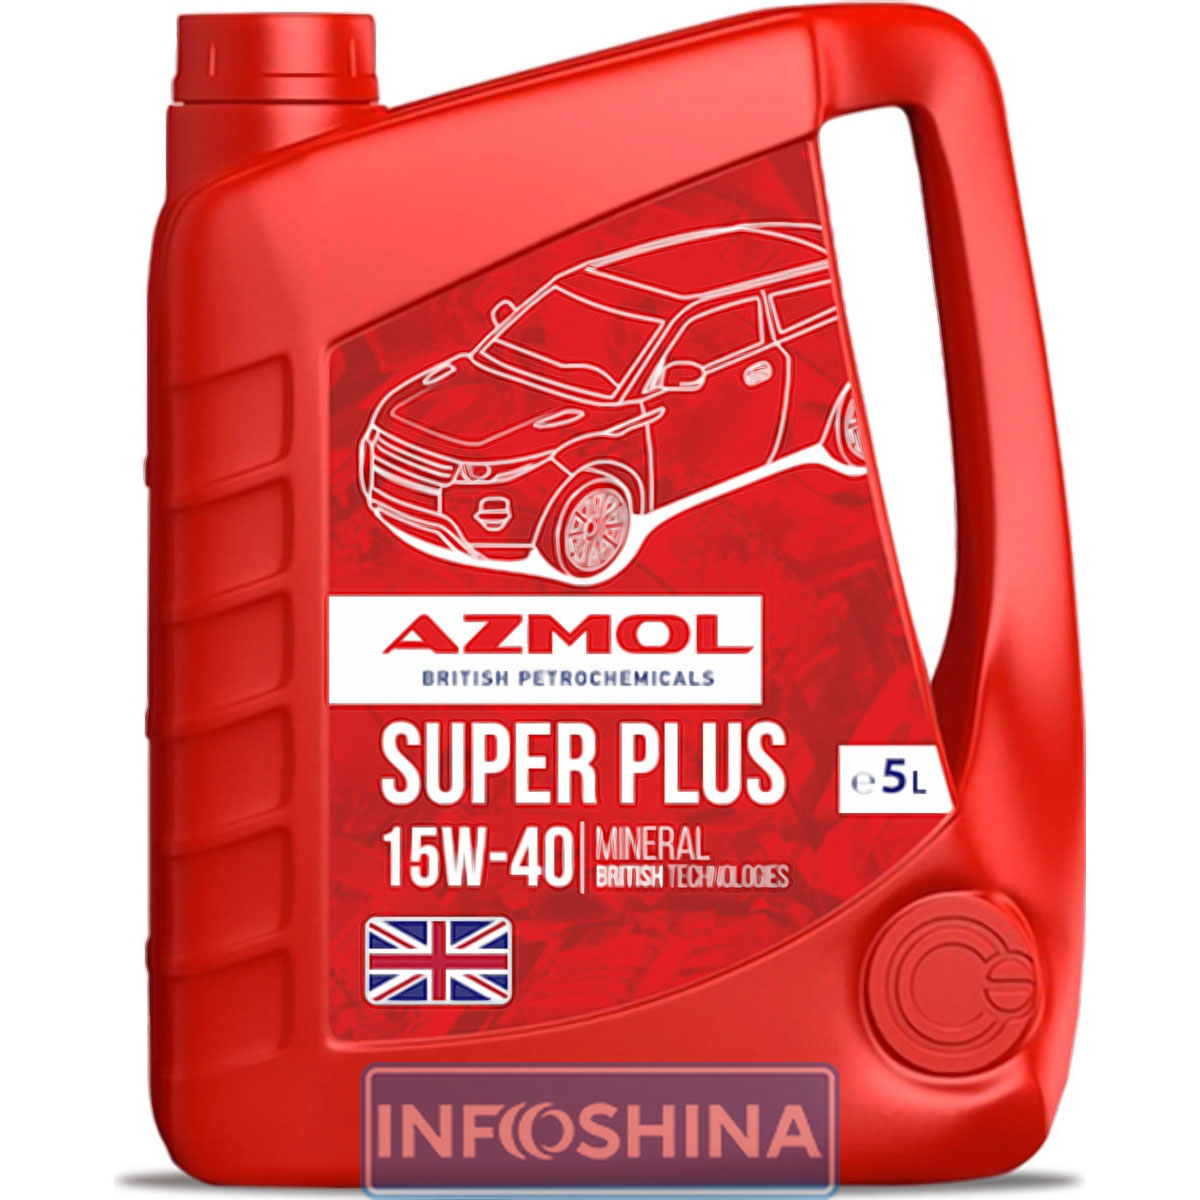 Azmol Super Plus 15W-40